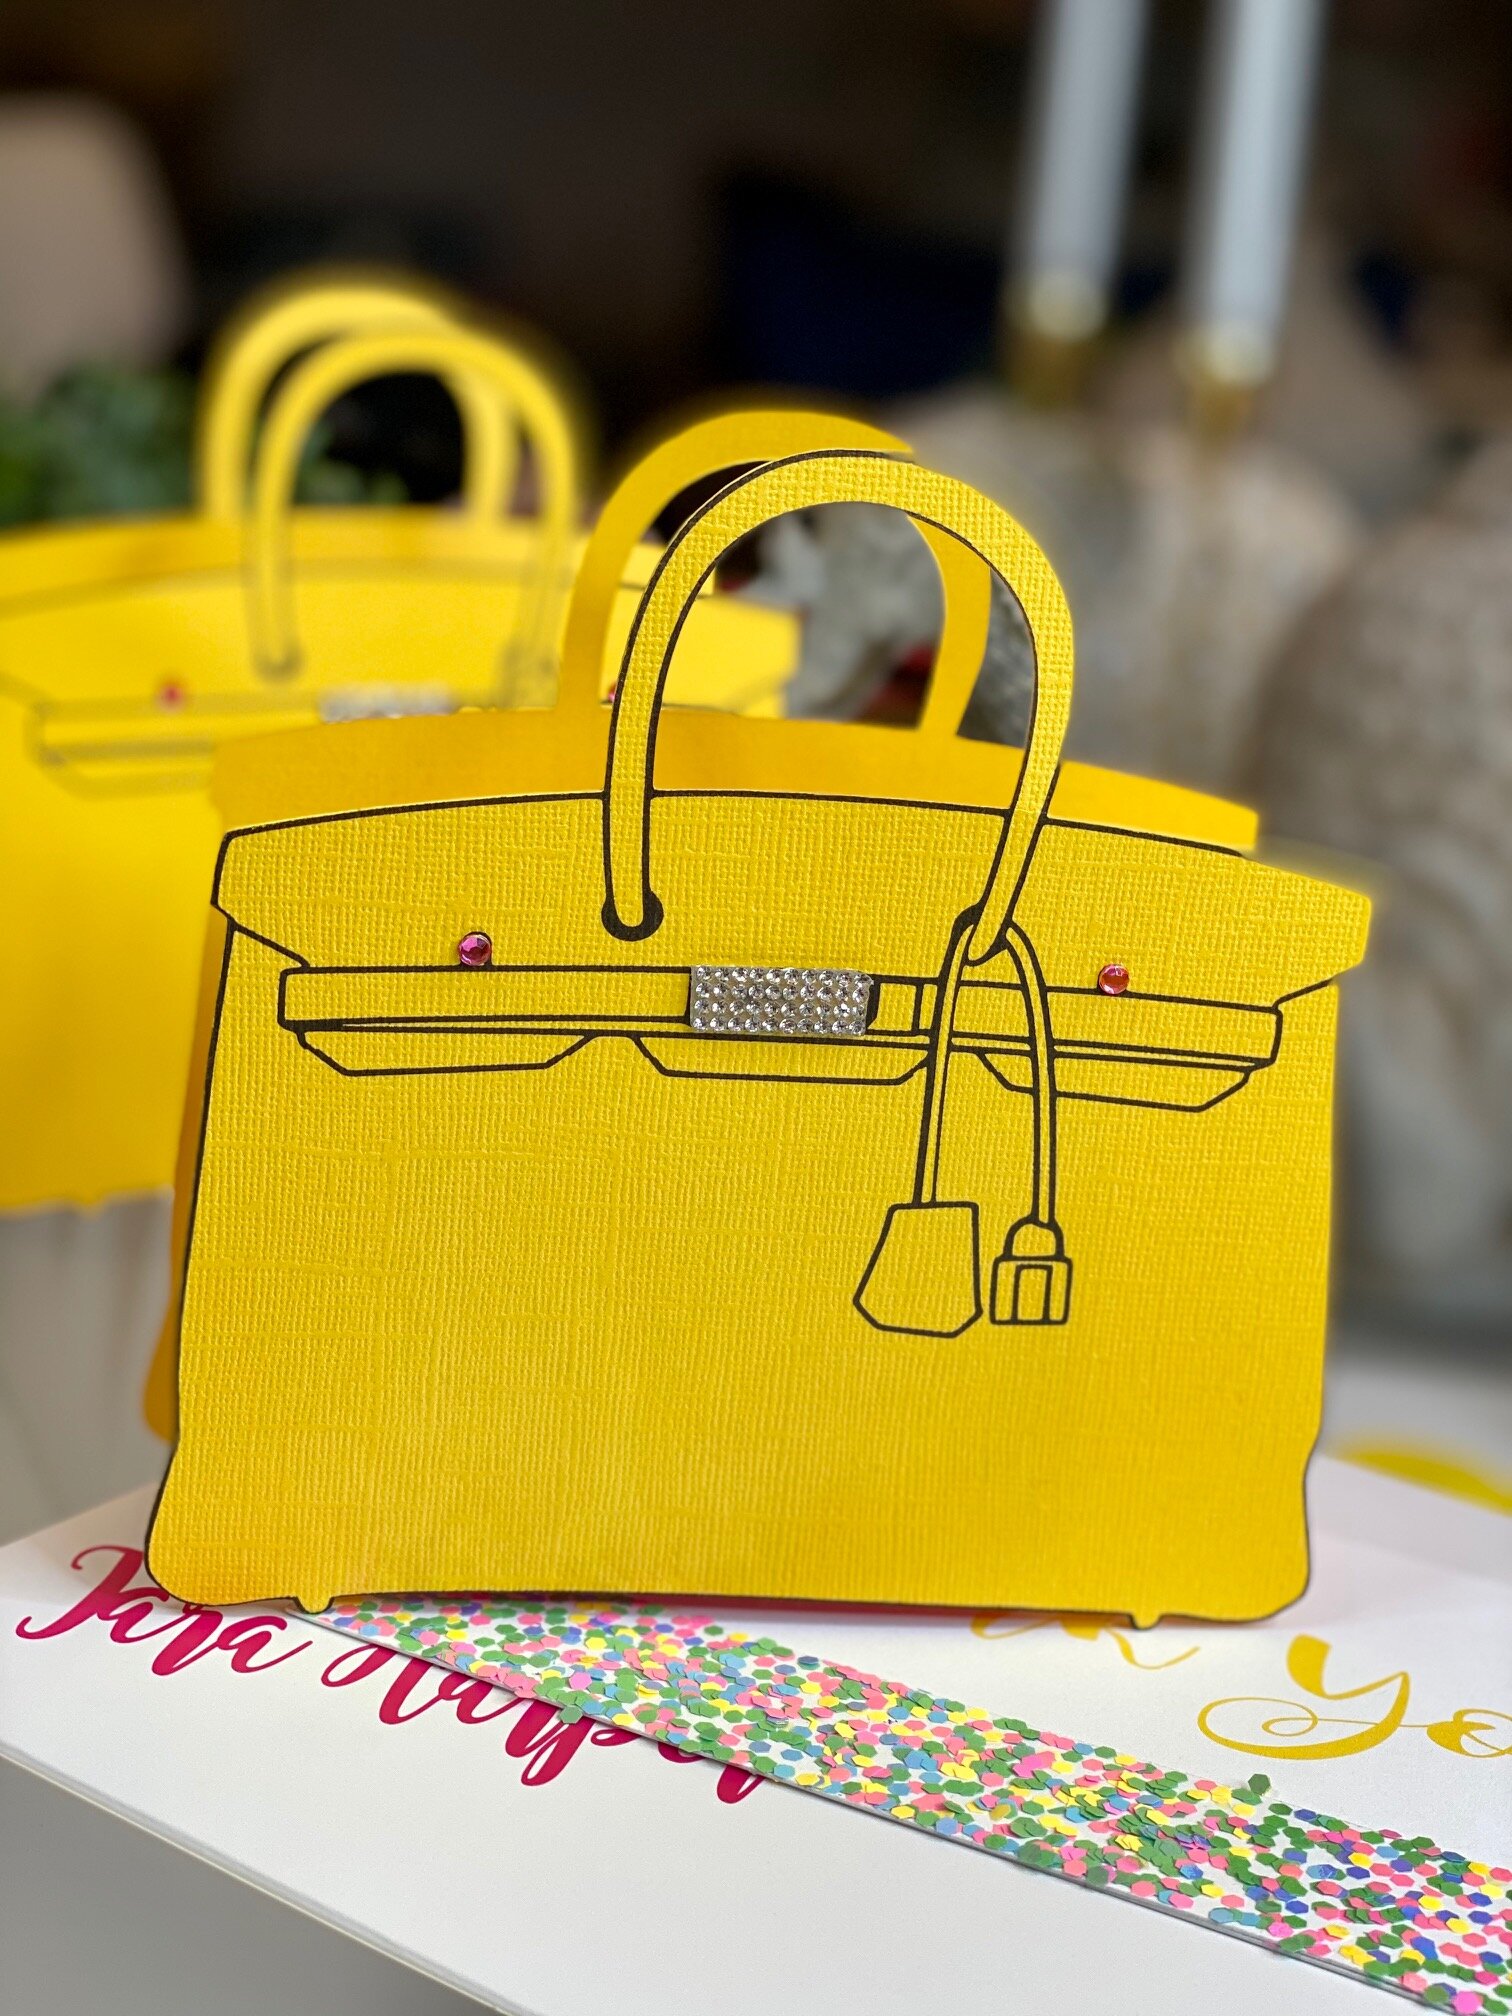 Birkin-Inspired Bags